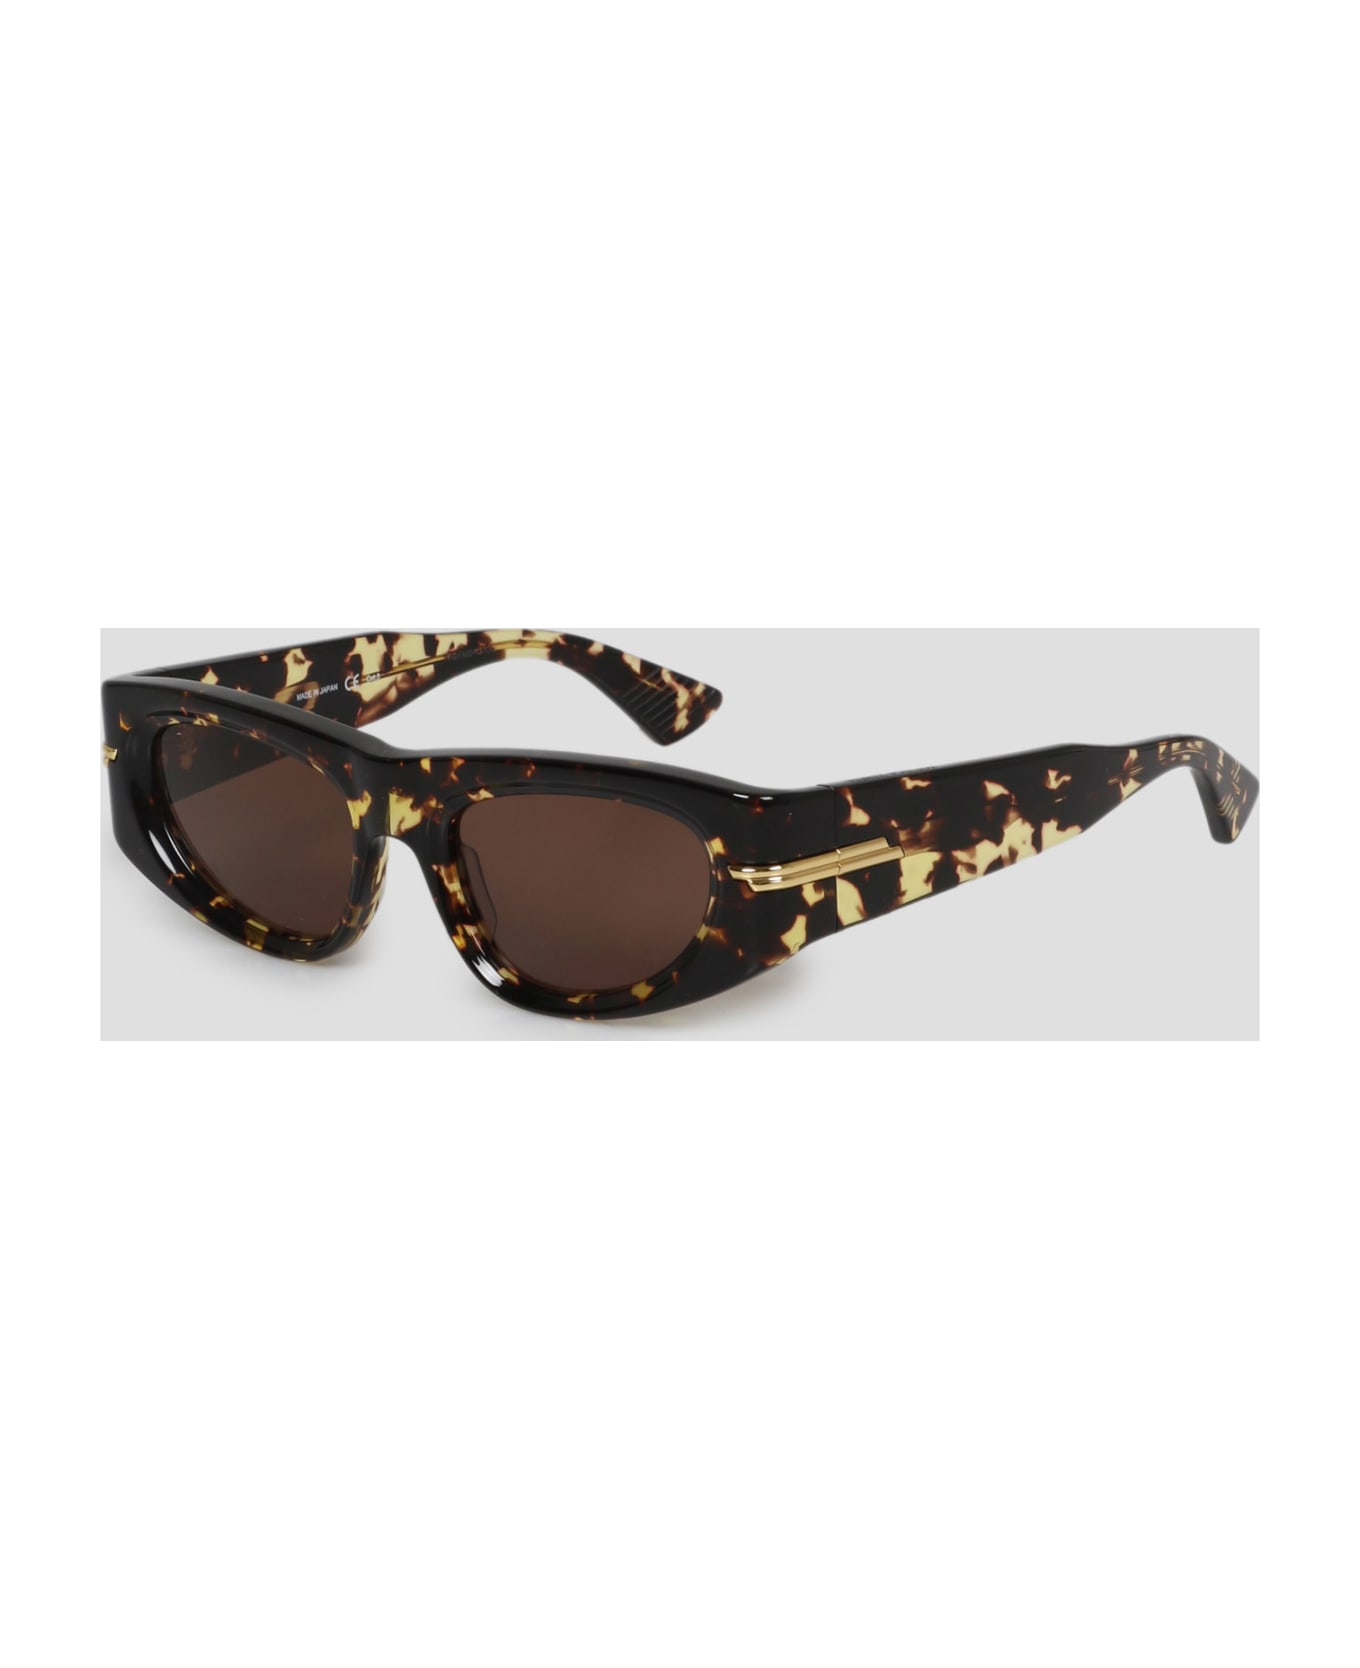 Bottega Veneta Eyewear Mitre Sunglasses - Brown